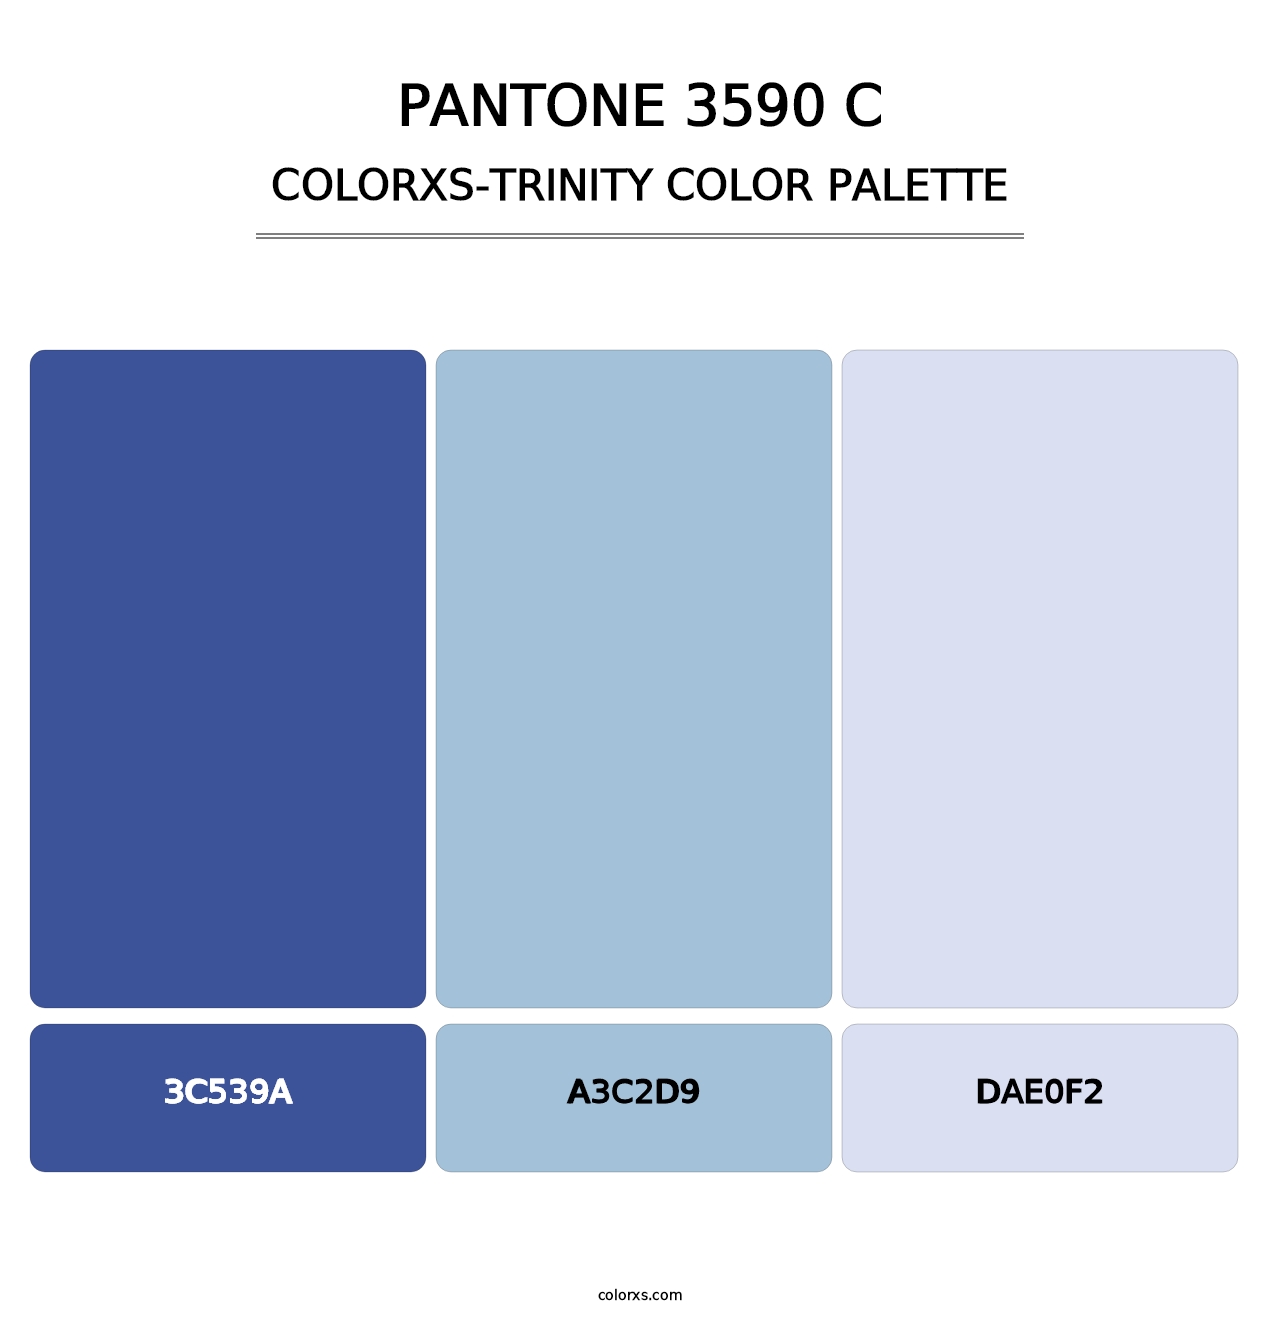 PANTONE 3590 C - Colorxs Trinity Palette